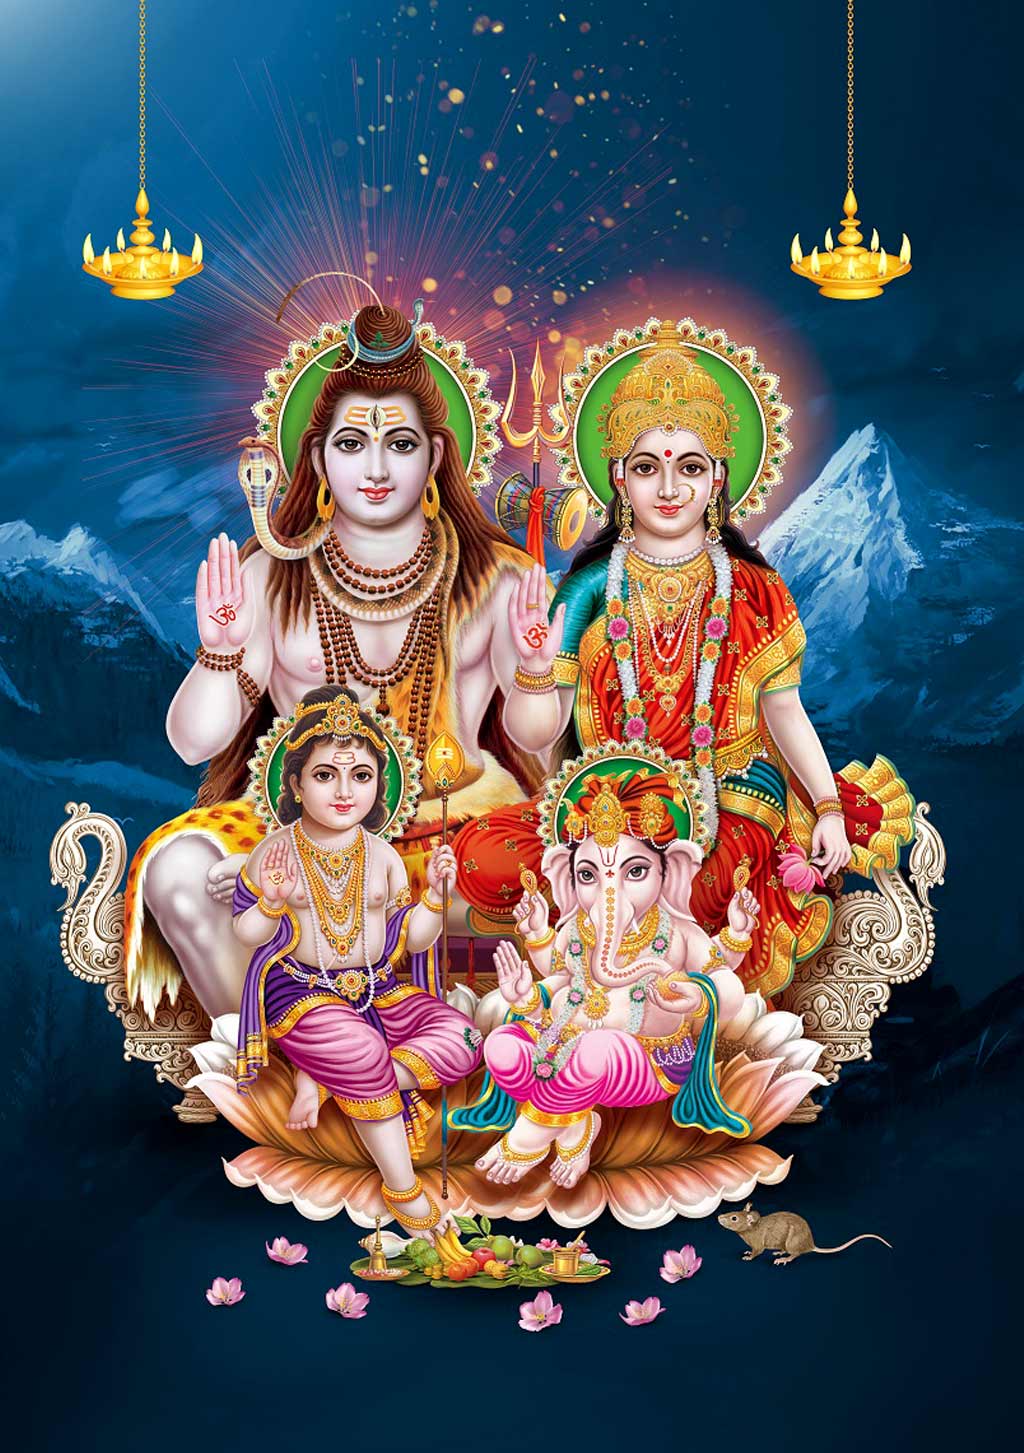 Shiva Parvathi Ganesha and Murugan (skanda)